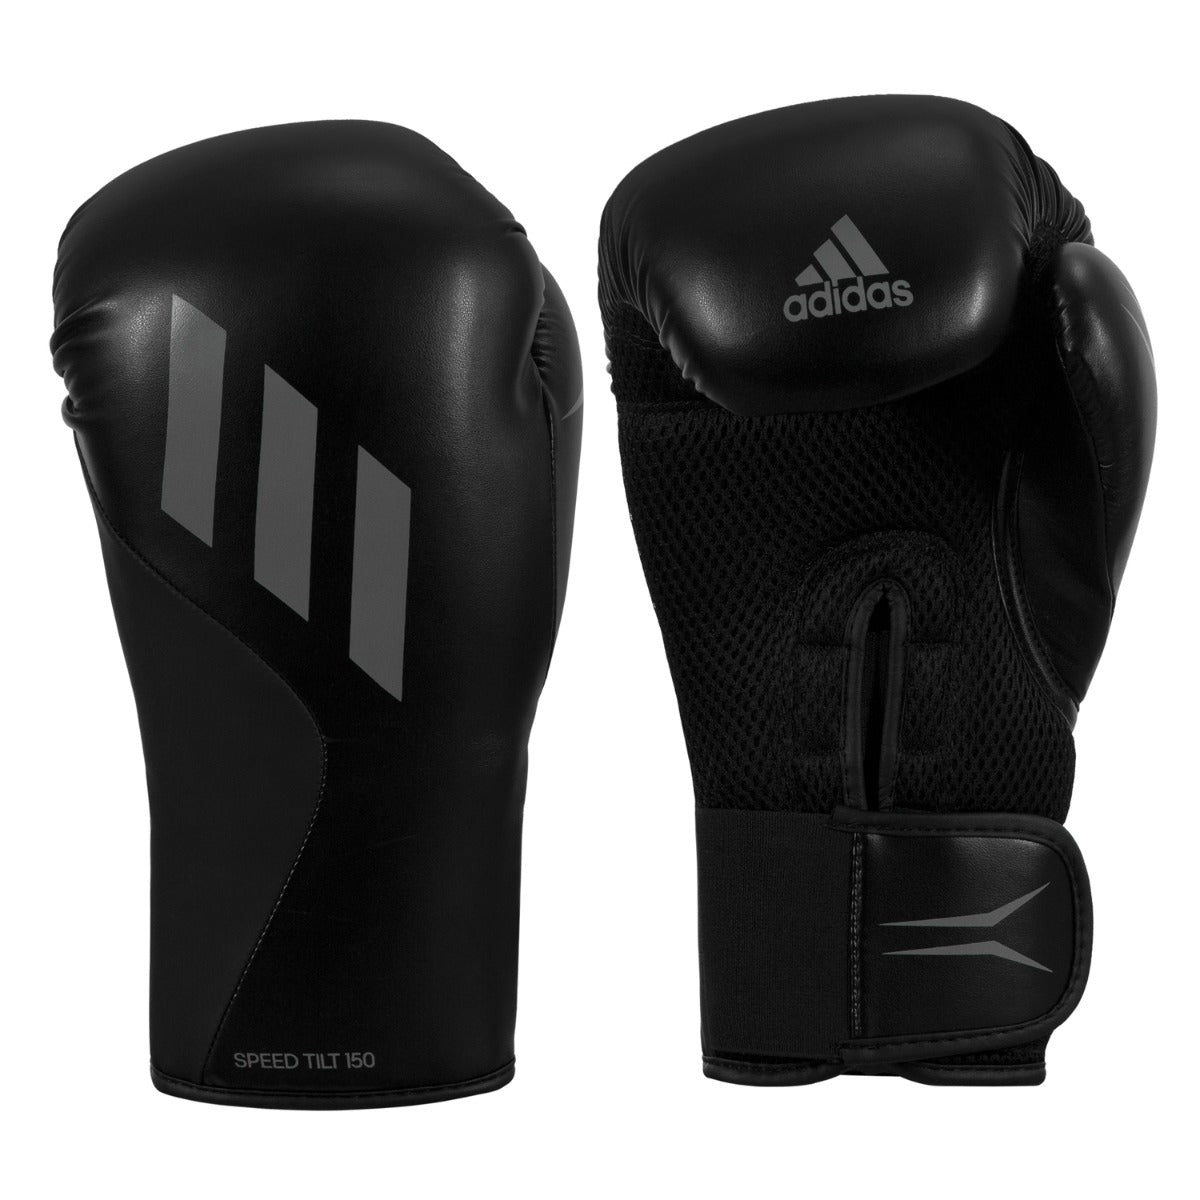 ADIDAS 150 Boxing Gloves